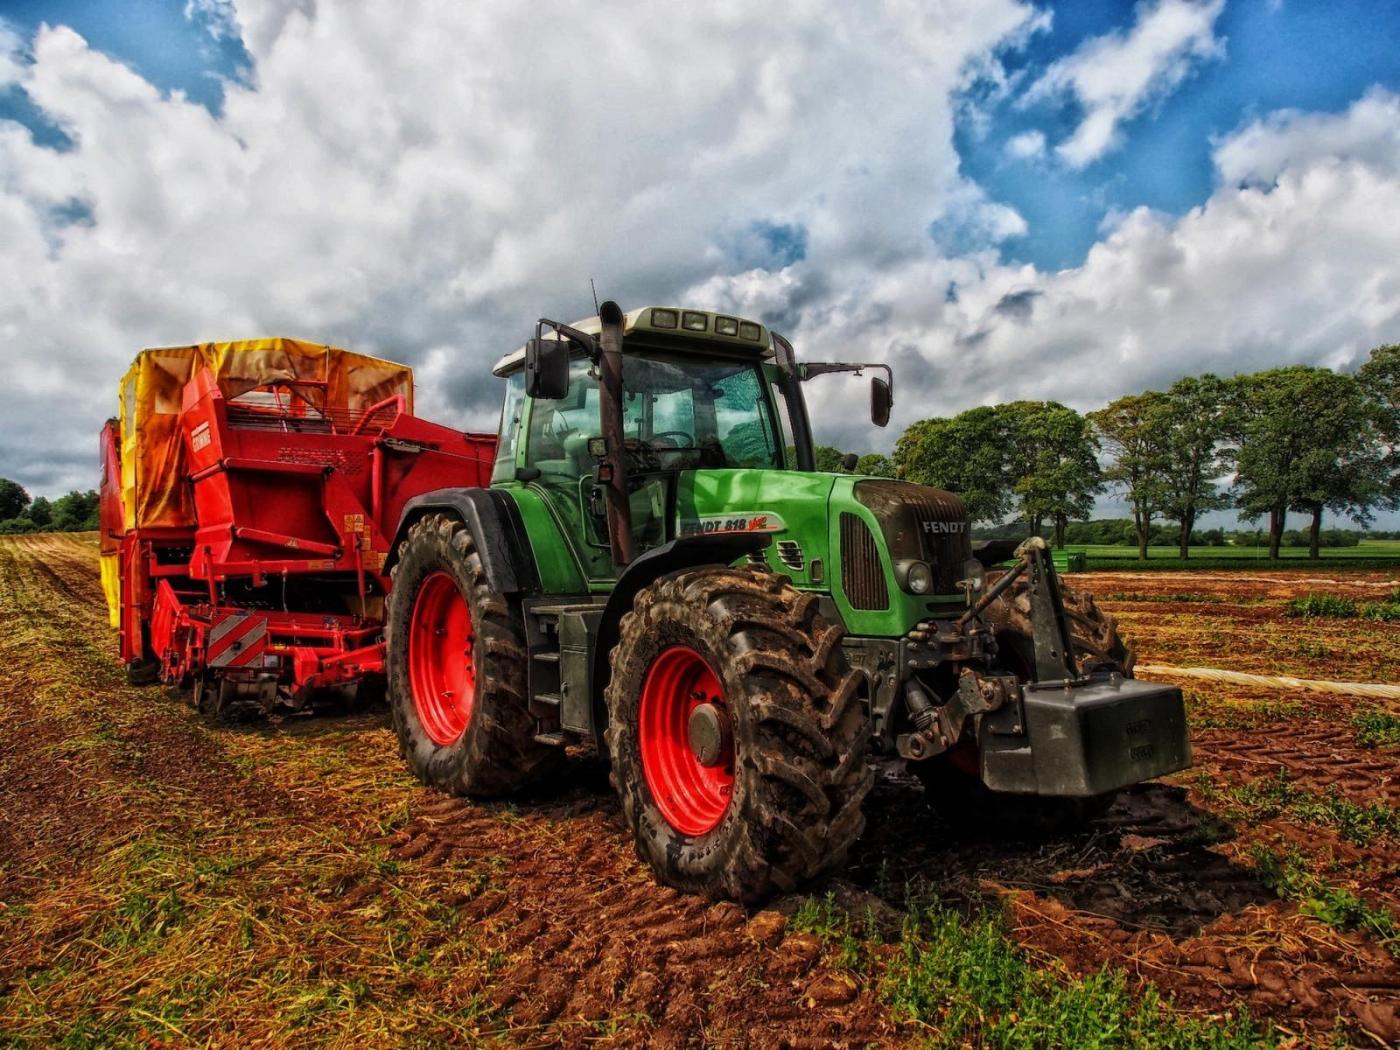 Green tractor. Photo credit: pixabay